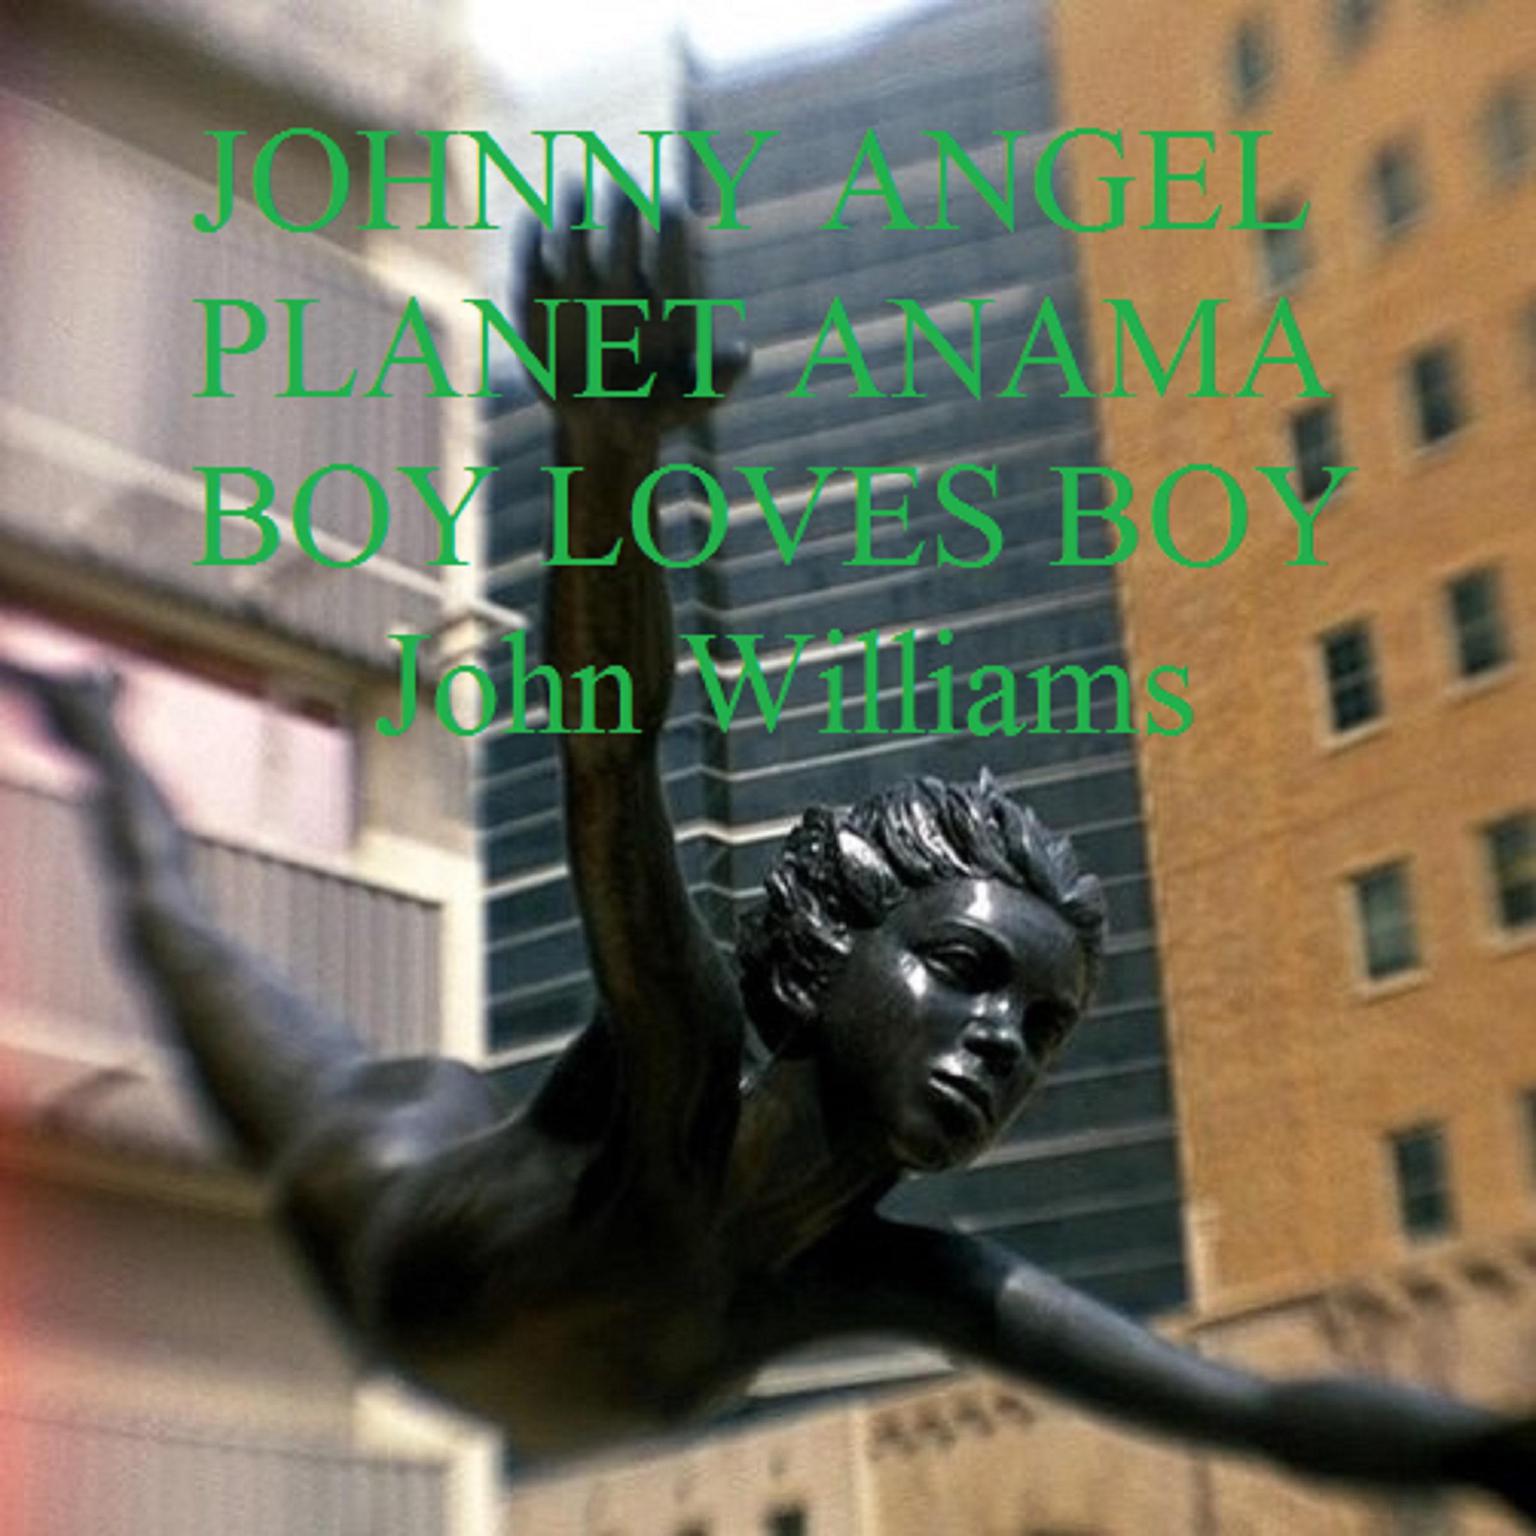 Johnny Angel Planet Anama Boy Loves Boy Audiobook, by John Williams